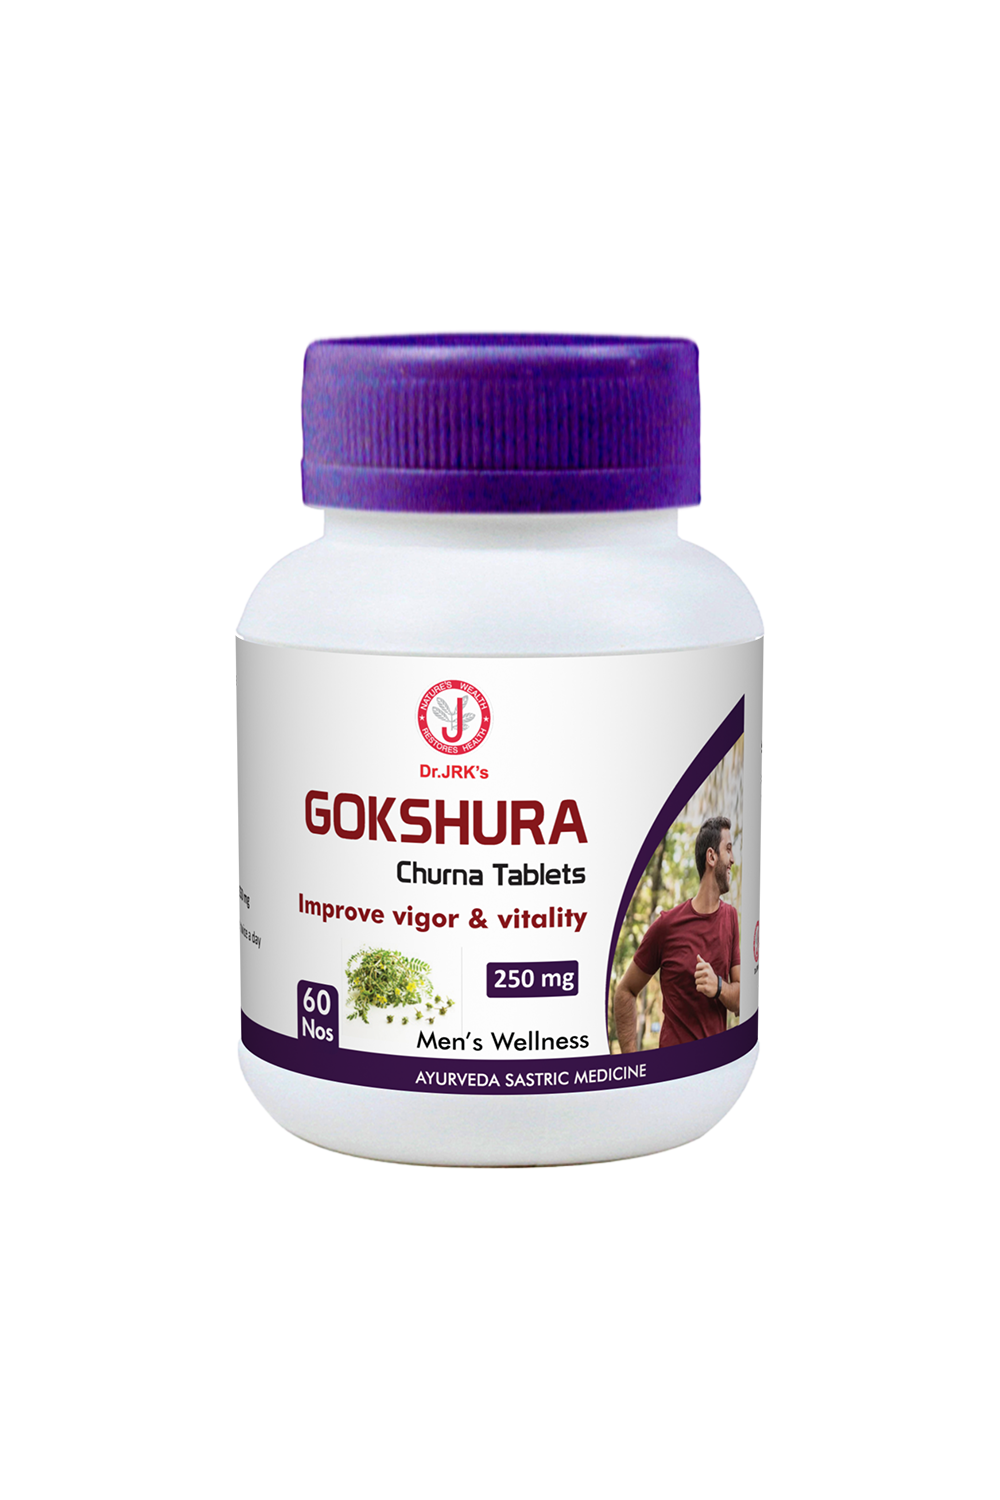 Dr. JRK's Gokshura Churna Tablets